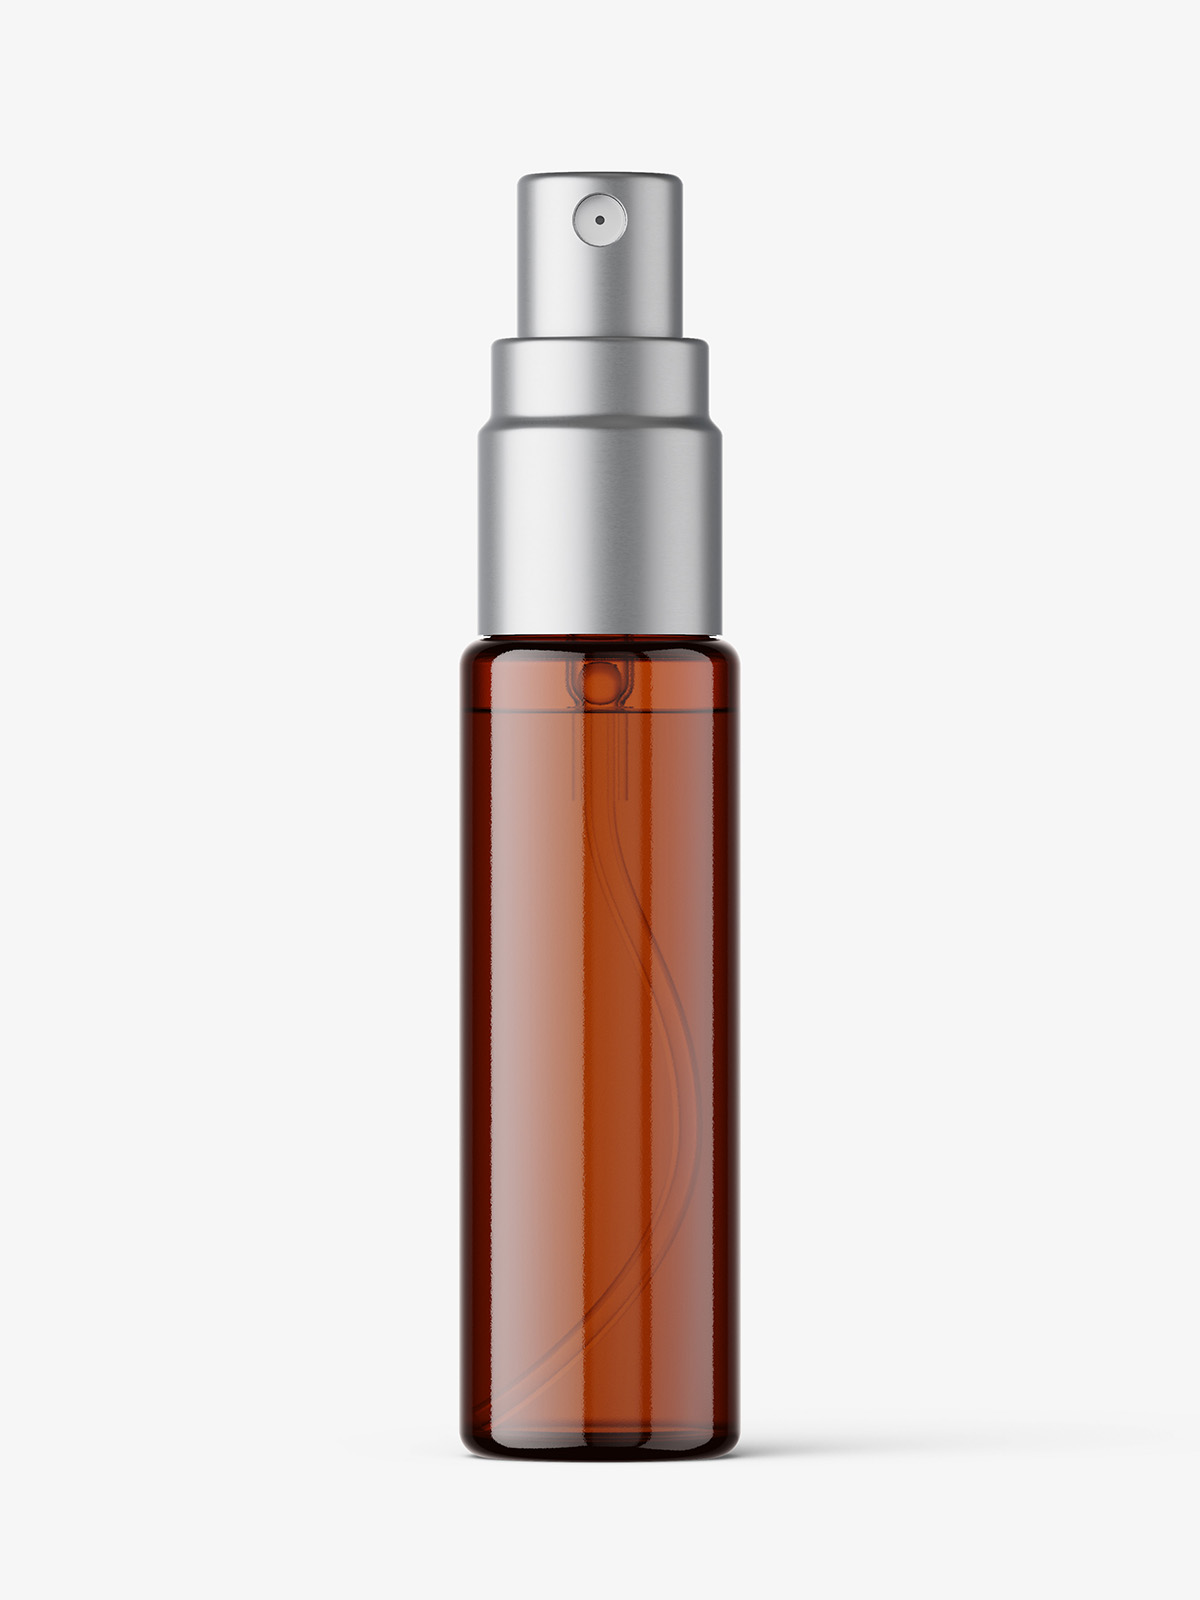 Download Amber Spray Bottle Mockup With Metallic Cap Smarty Mockups